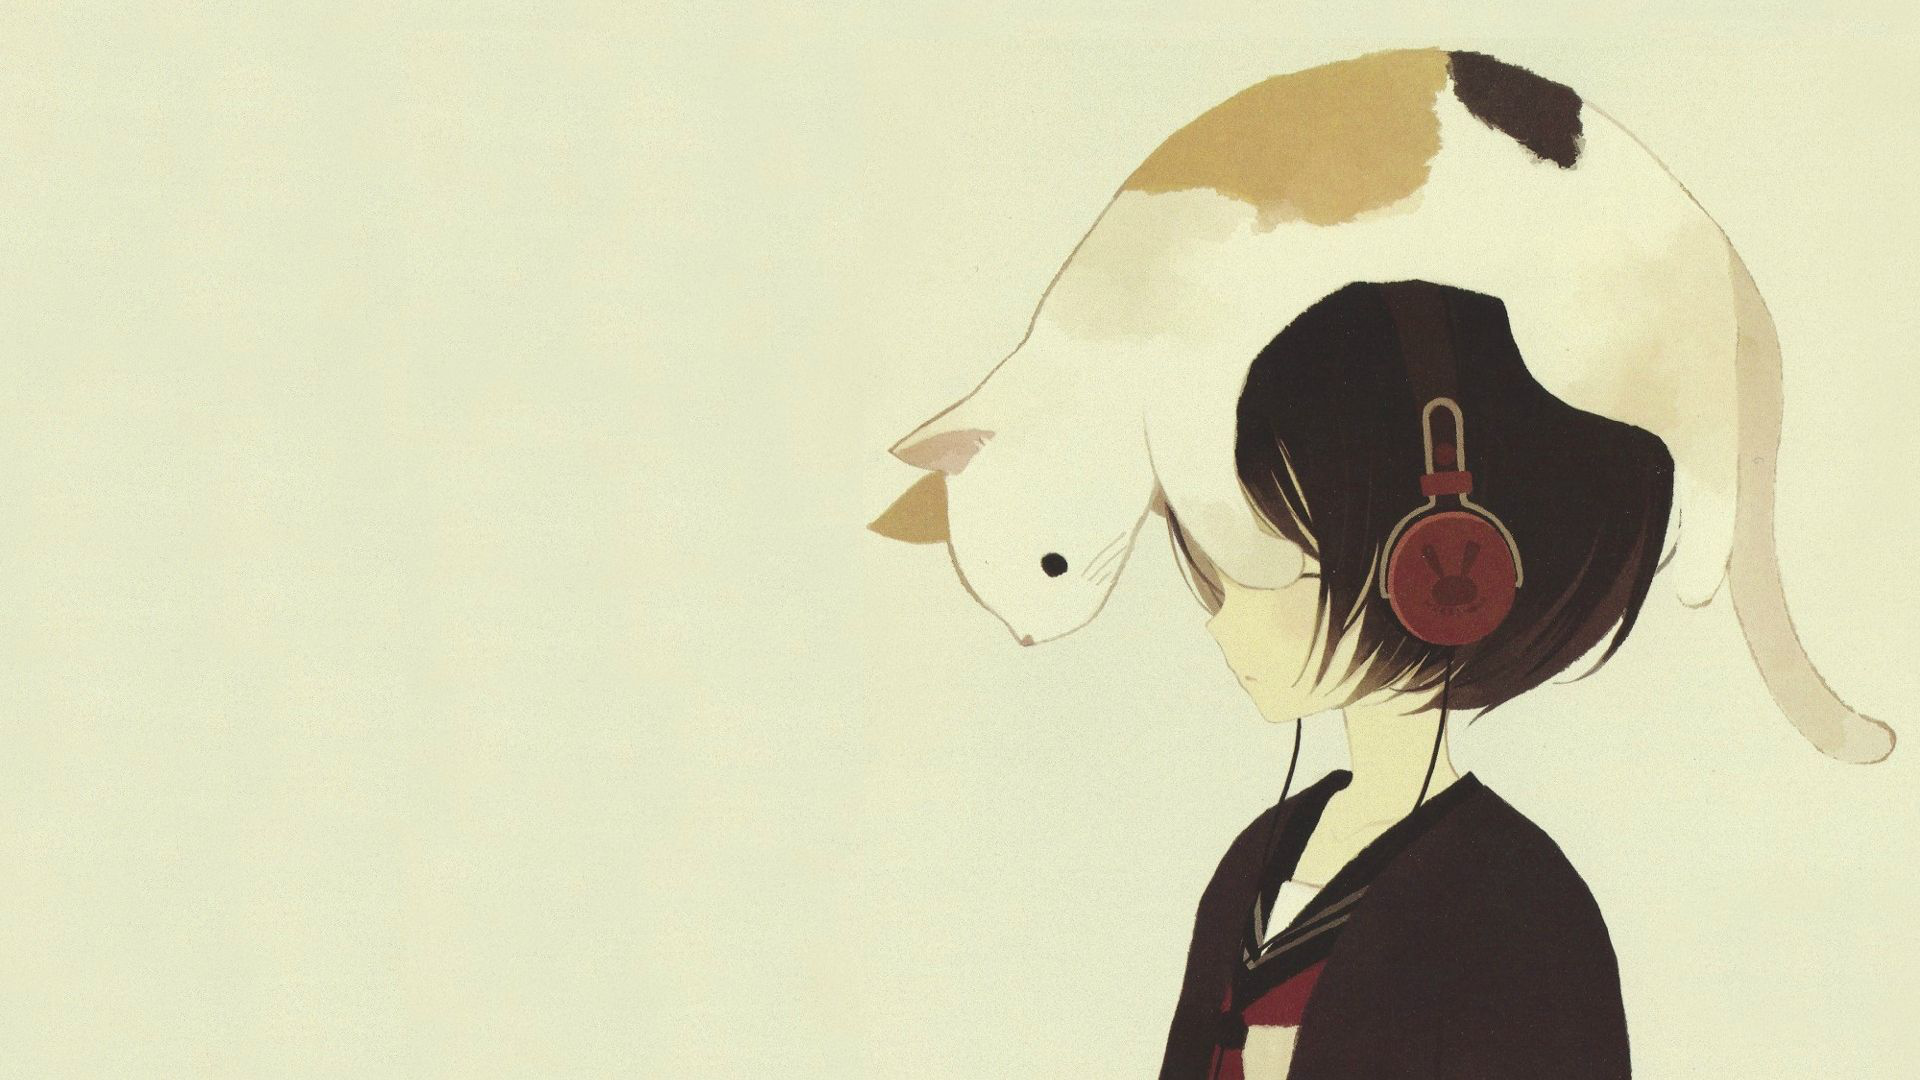 Anime 1920x1080 digital art sailor uniform short hair headphones side view cats drawn profile